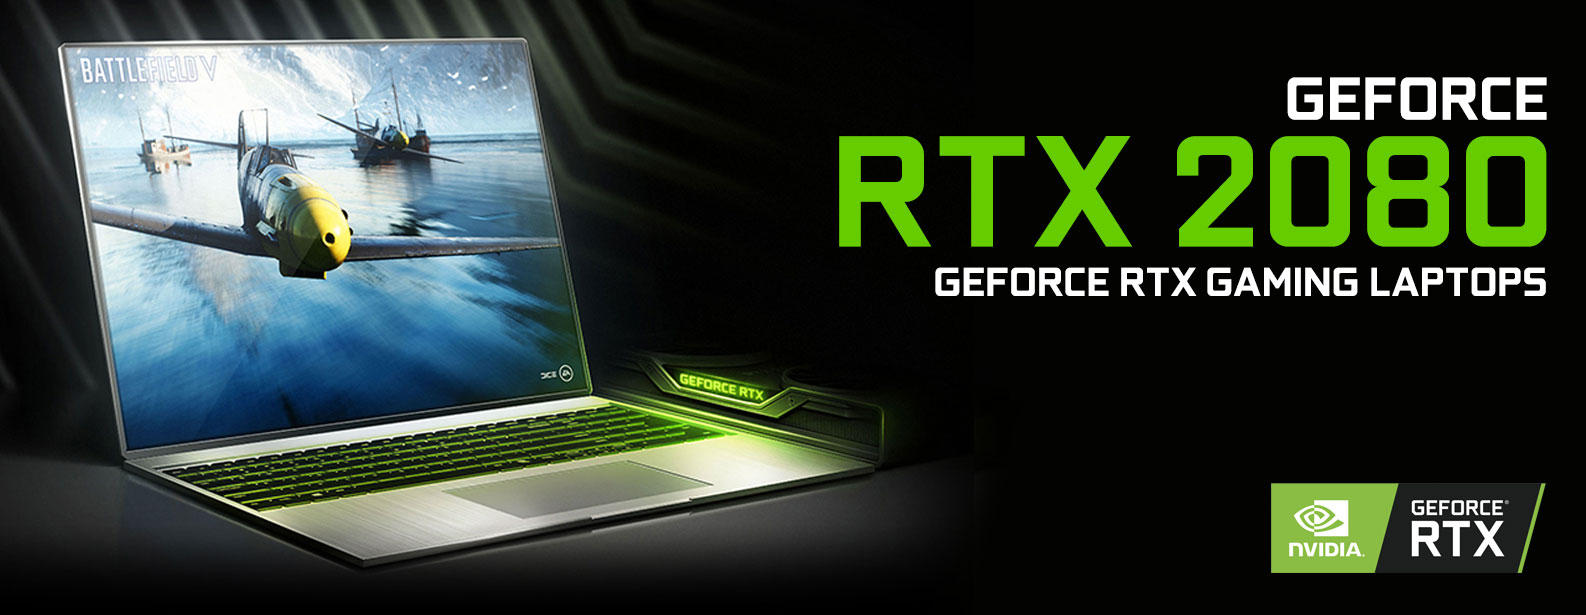 RTX 2080 Laptop Deals South Africa